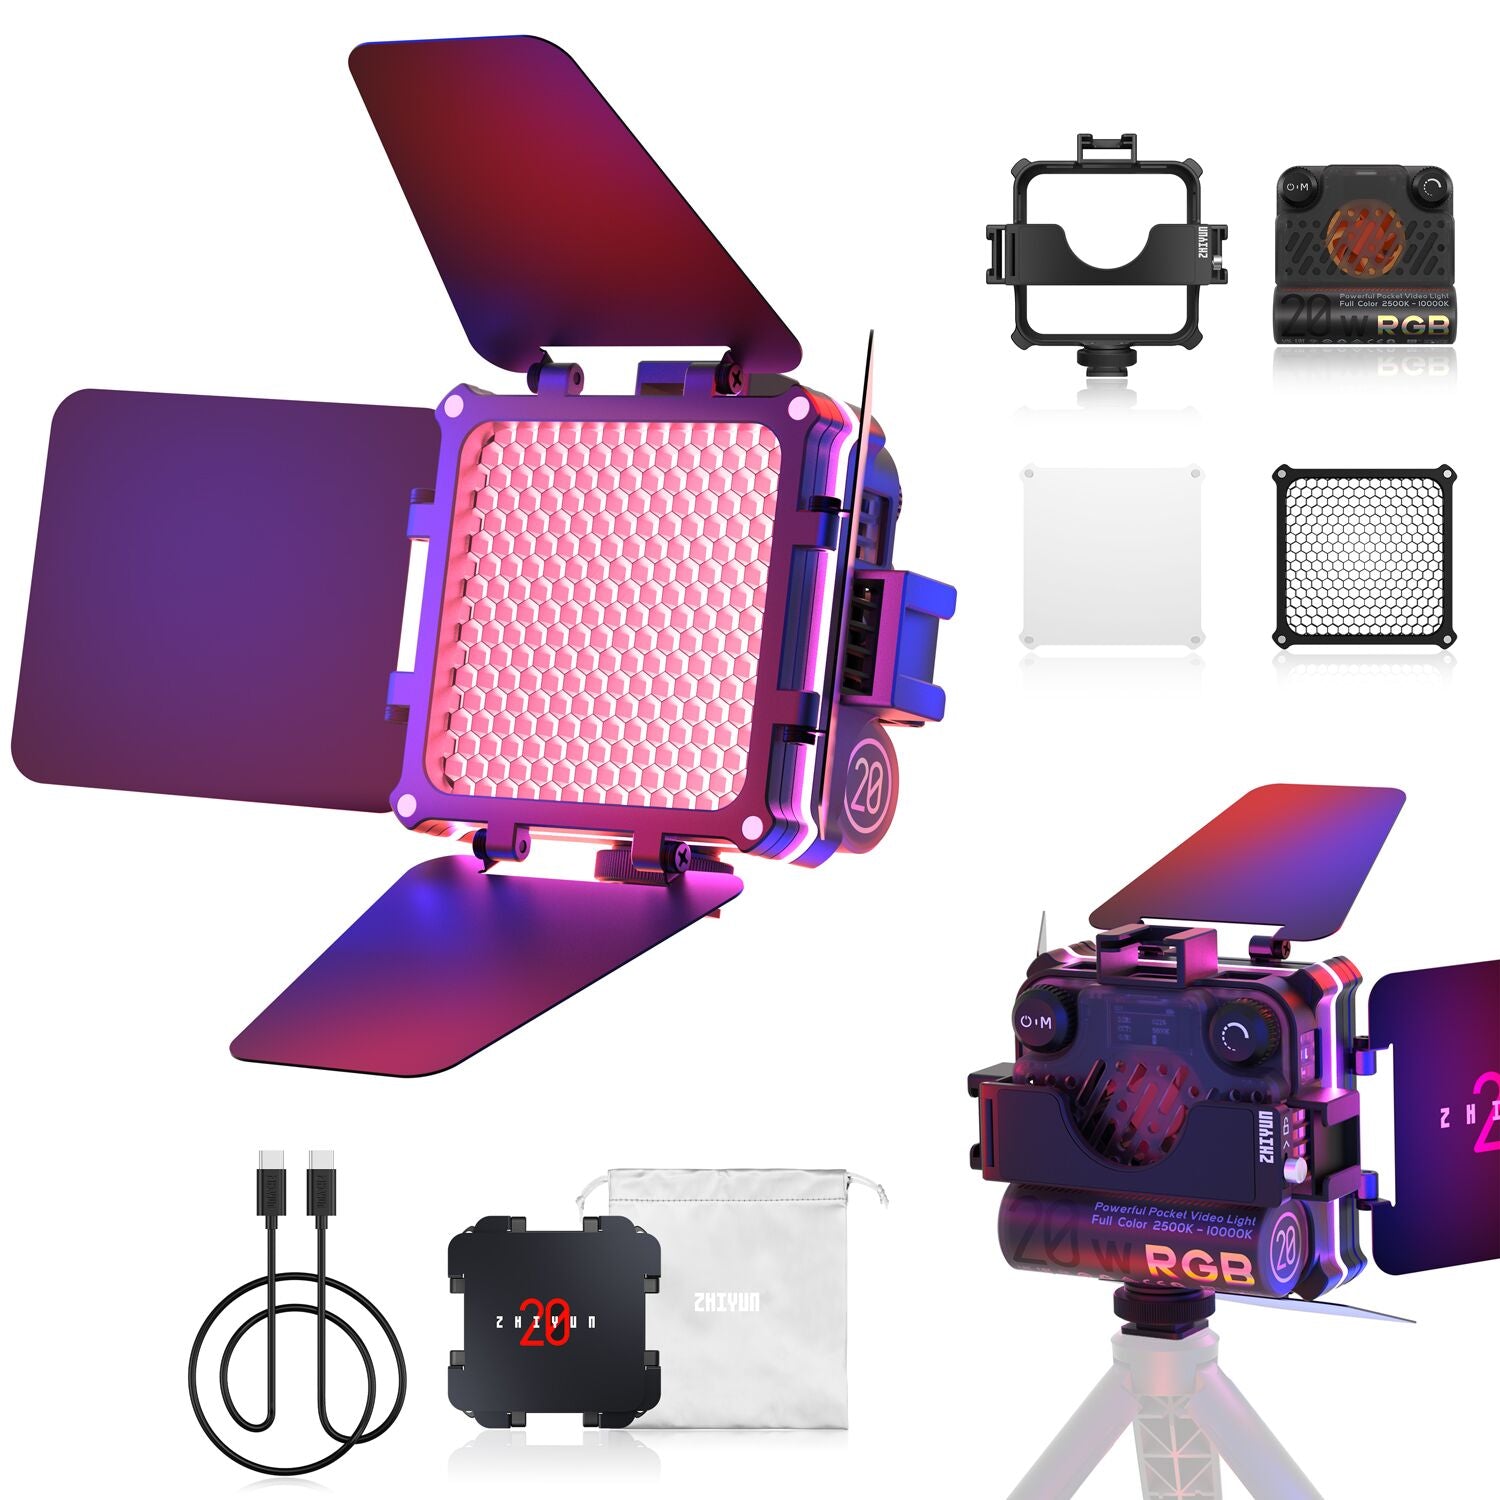 ZHIYUN FIVERAY M20C RGB Video Light 20W Portable Camera Light Support App Control